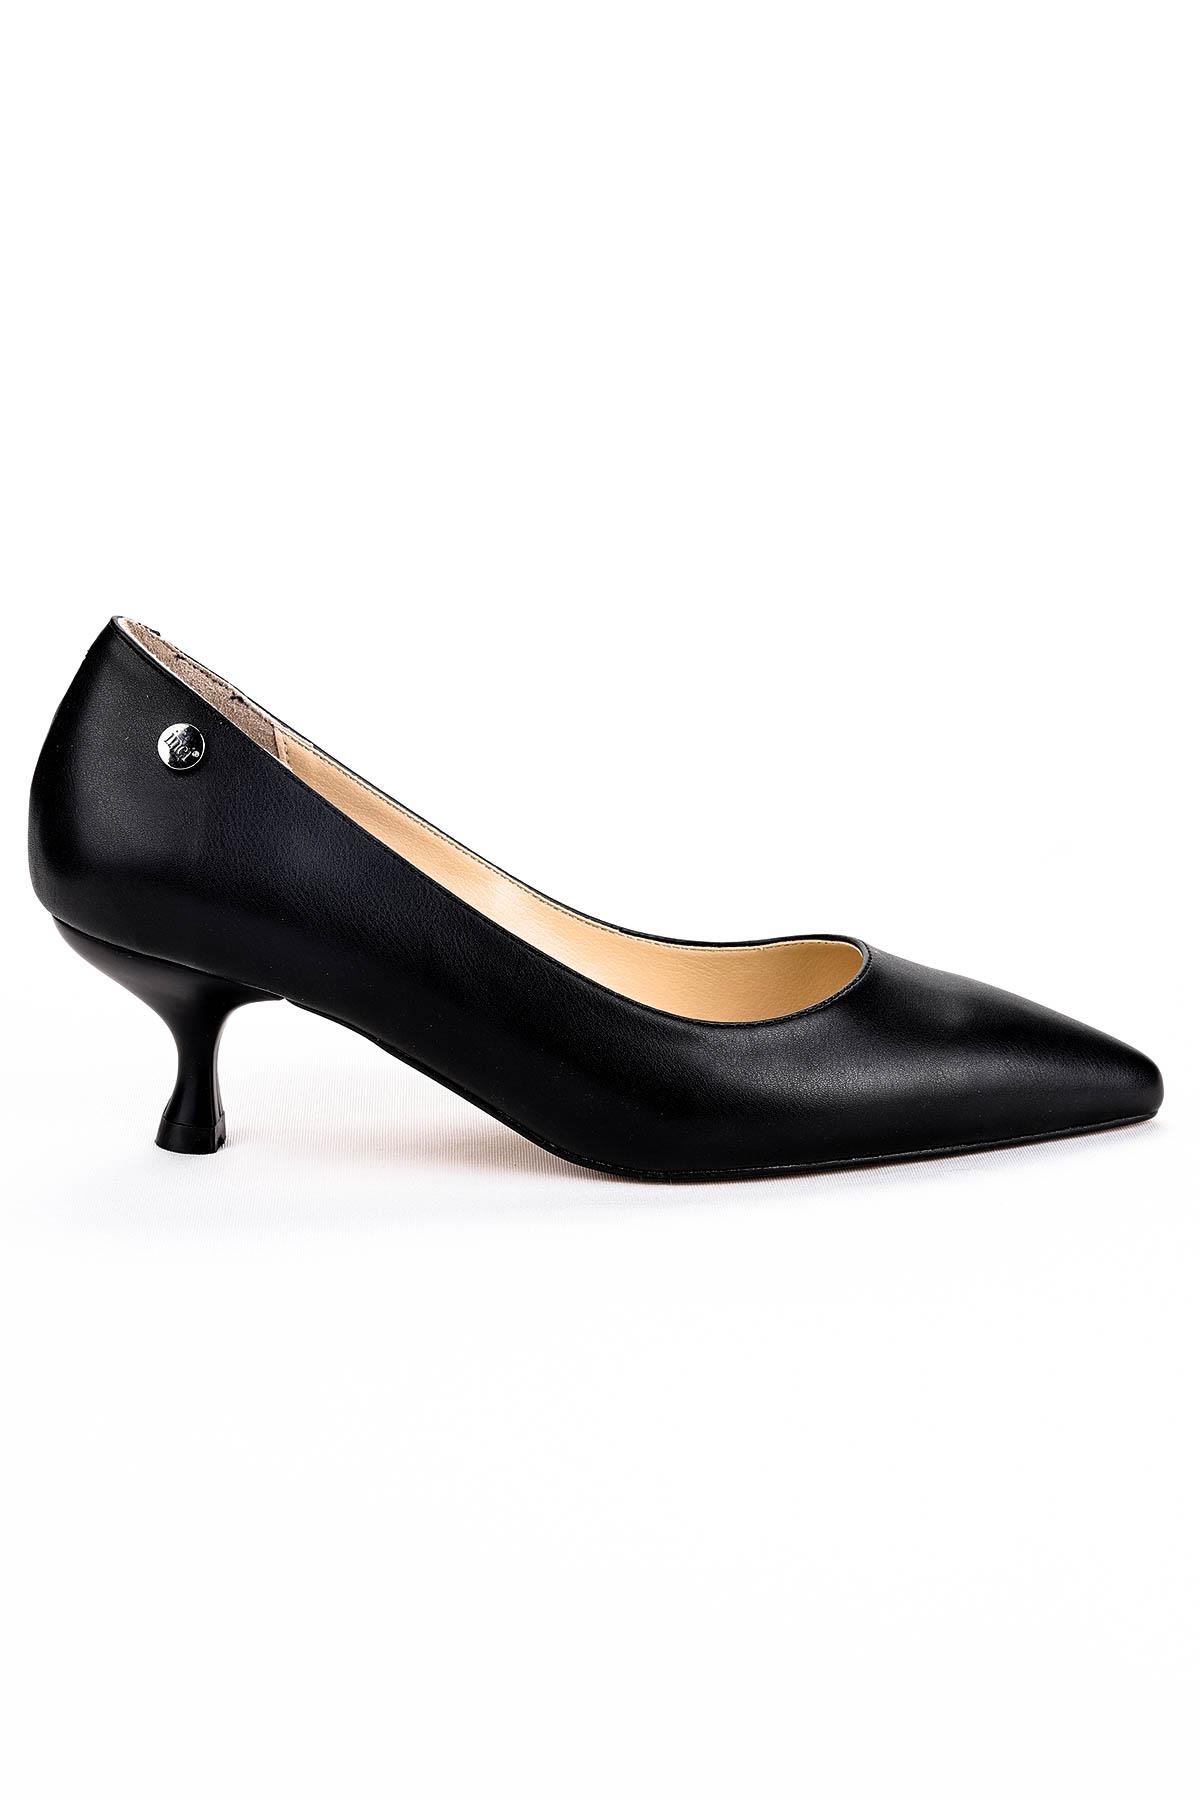 Trudy Cilt 5 Cm Topuk Stiletto Kadın Alçak Topuklu Ayakkabı Siyah